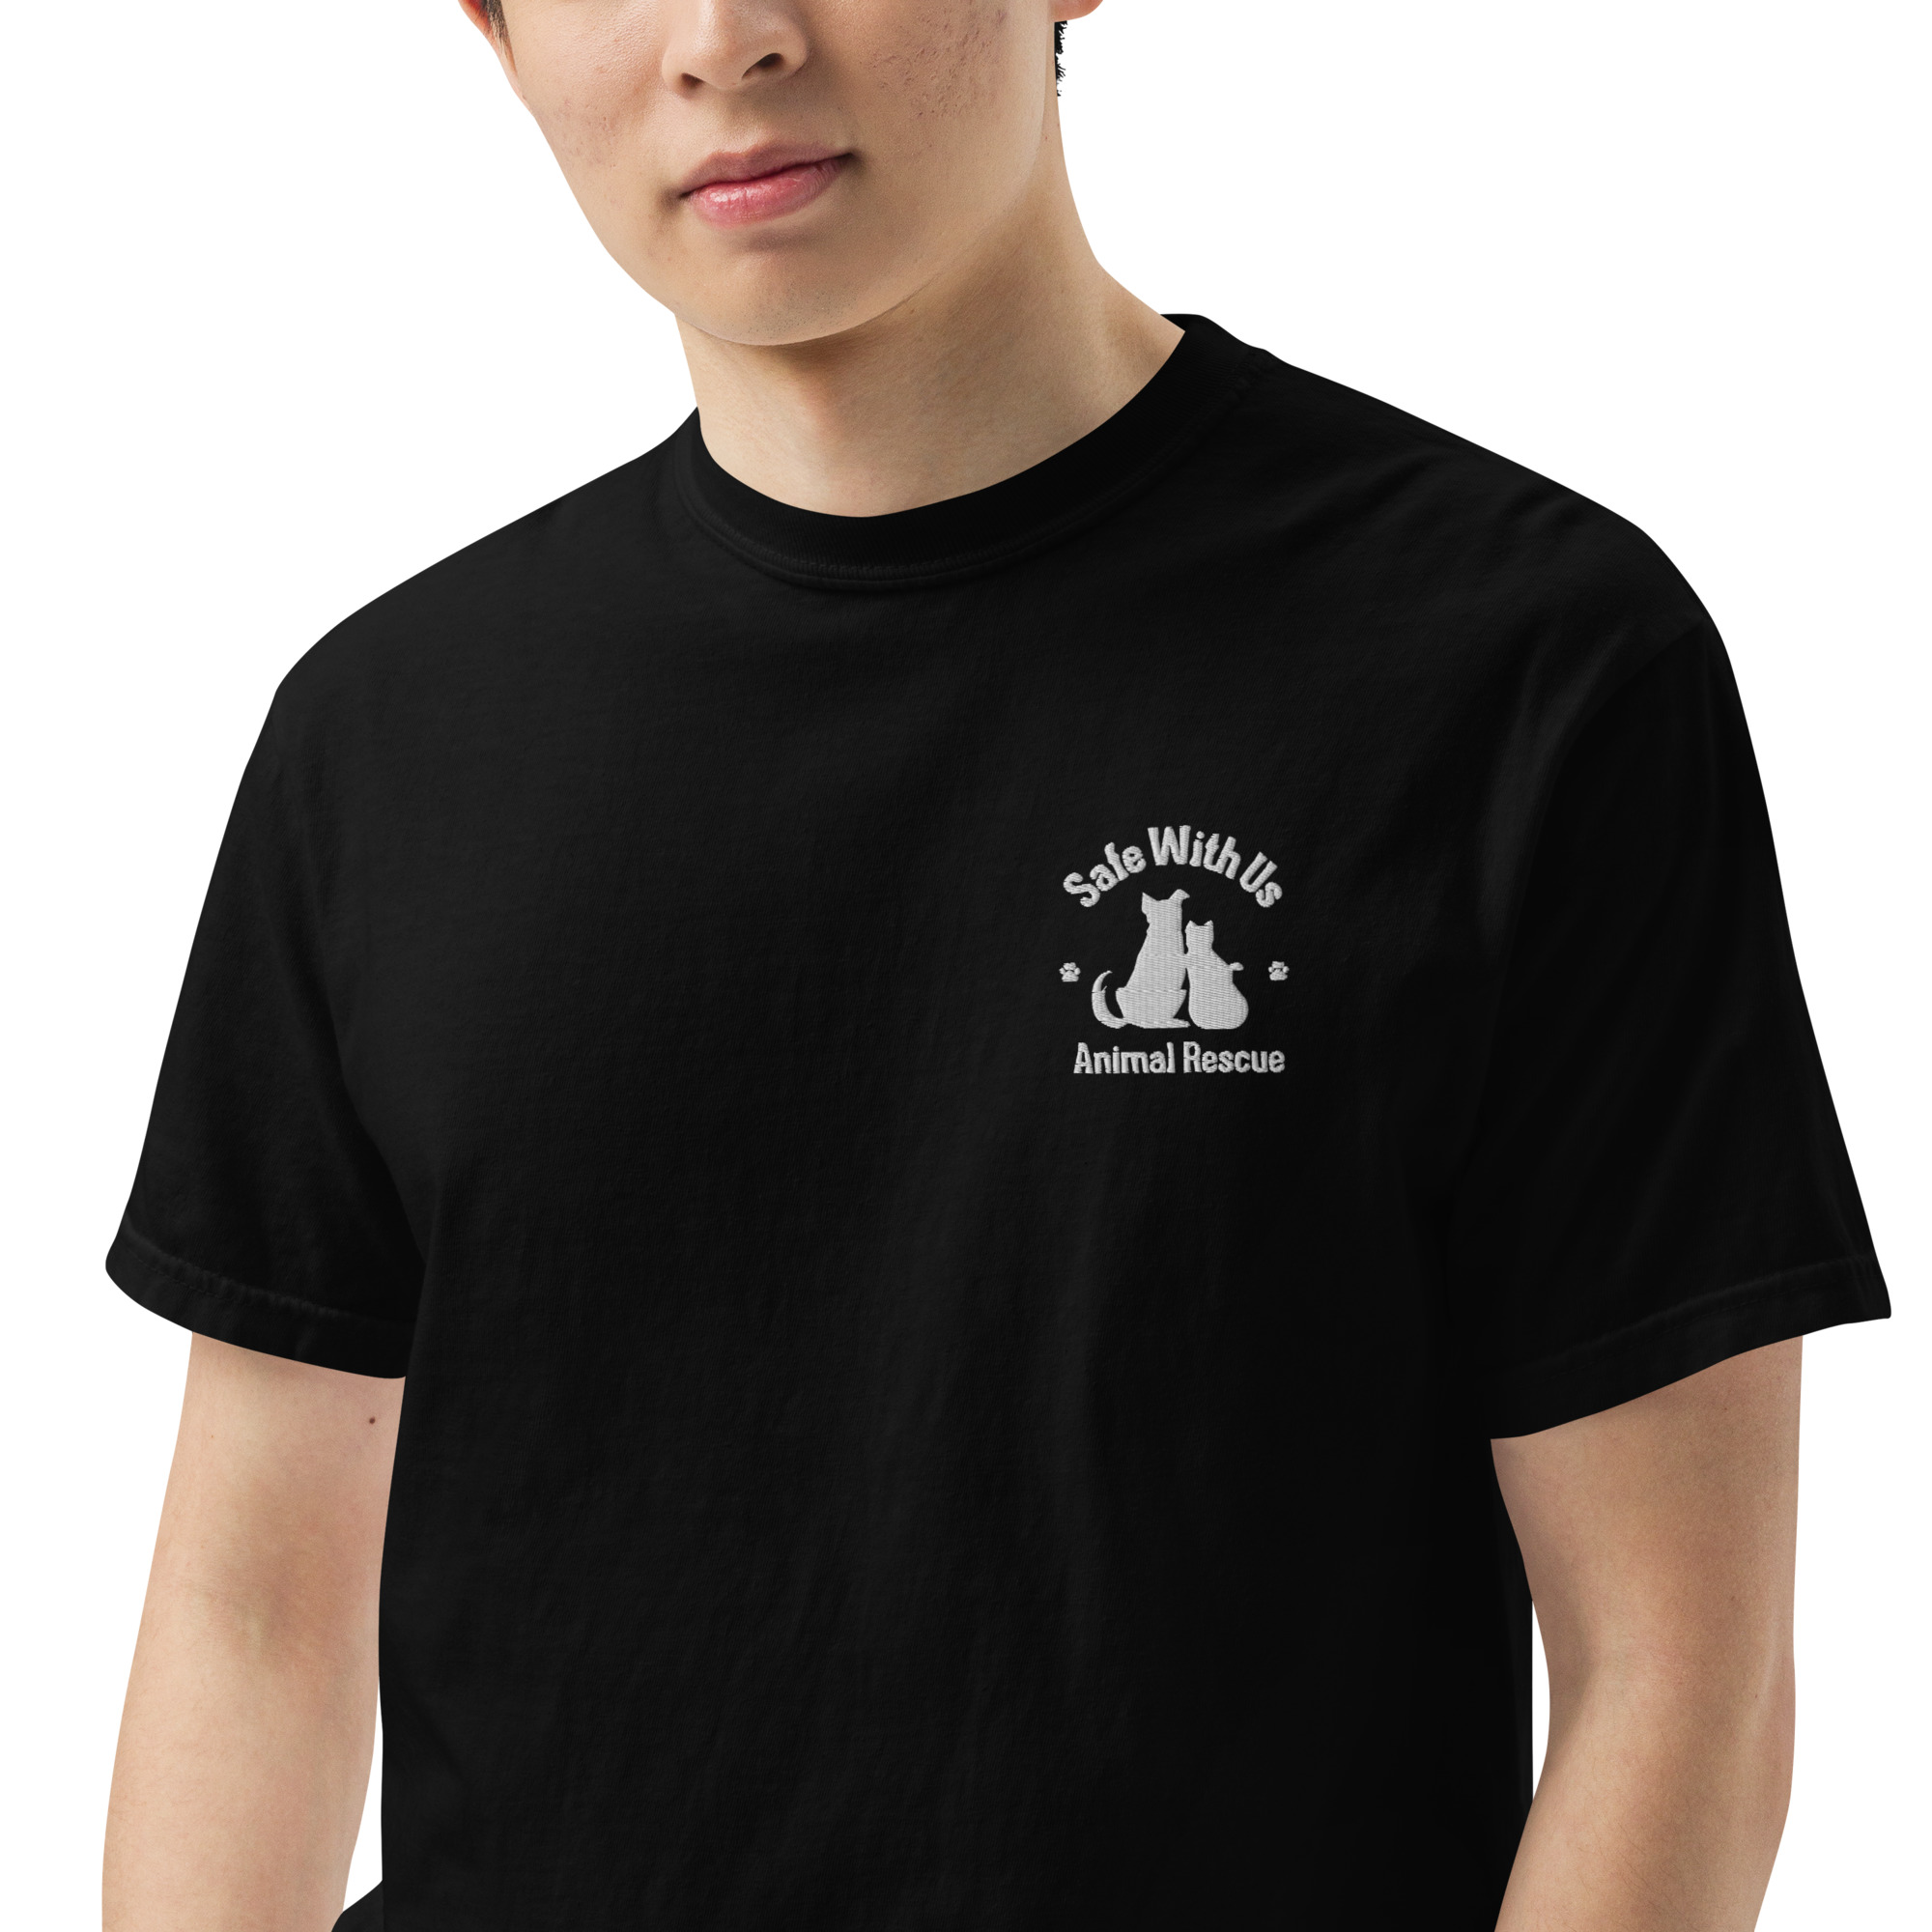 mens-garment-dyed-heavyweight-t-shirt-black-zoomed-in-3-6415fedc246c4.jpg